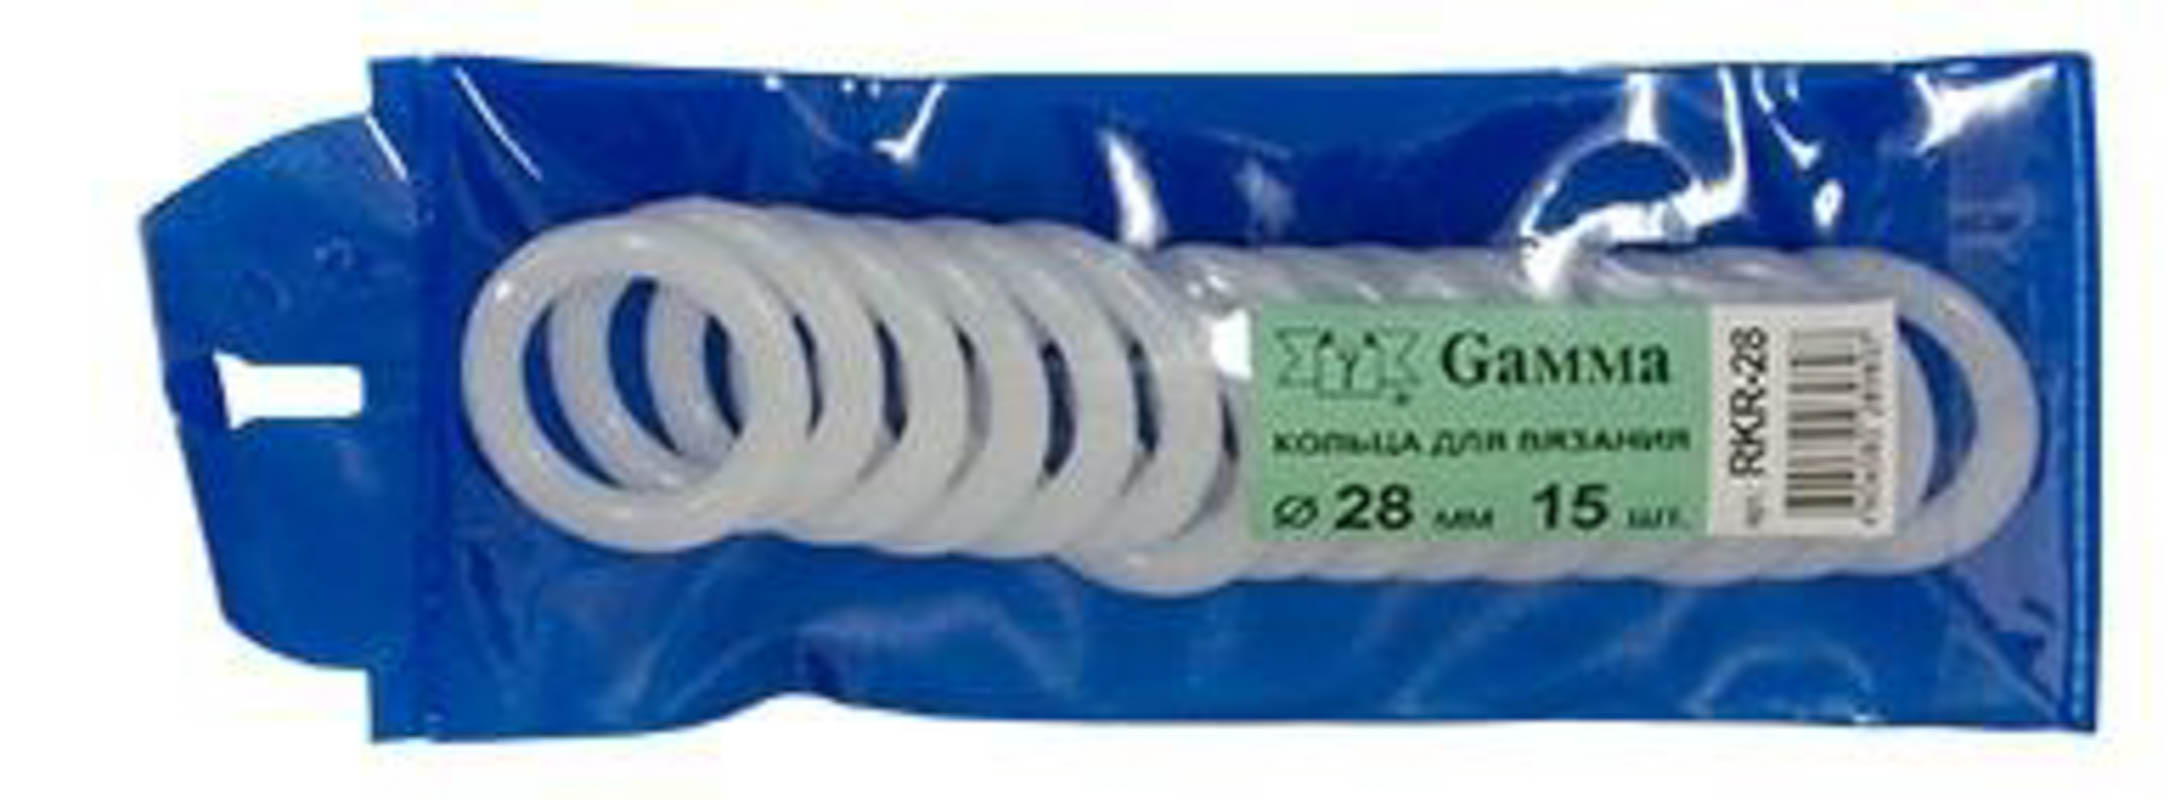 Кольца для вязания «Gamma» RKR-28 пластик, d=28 мм